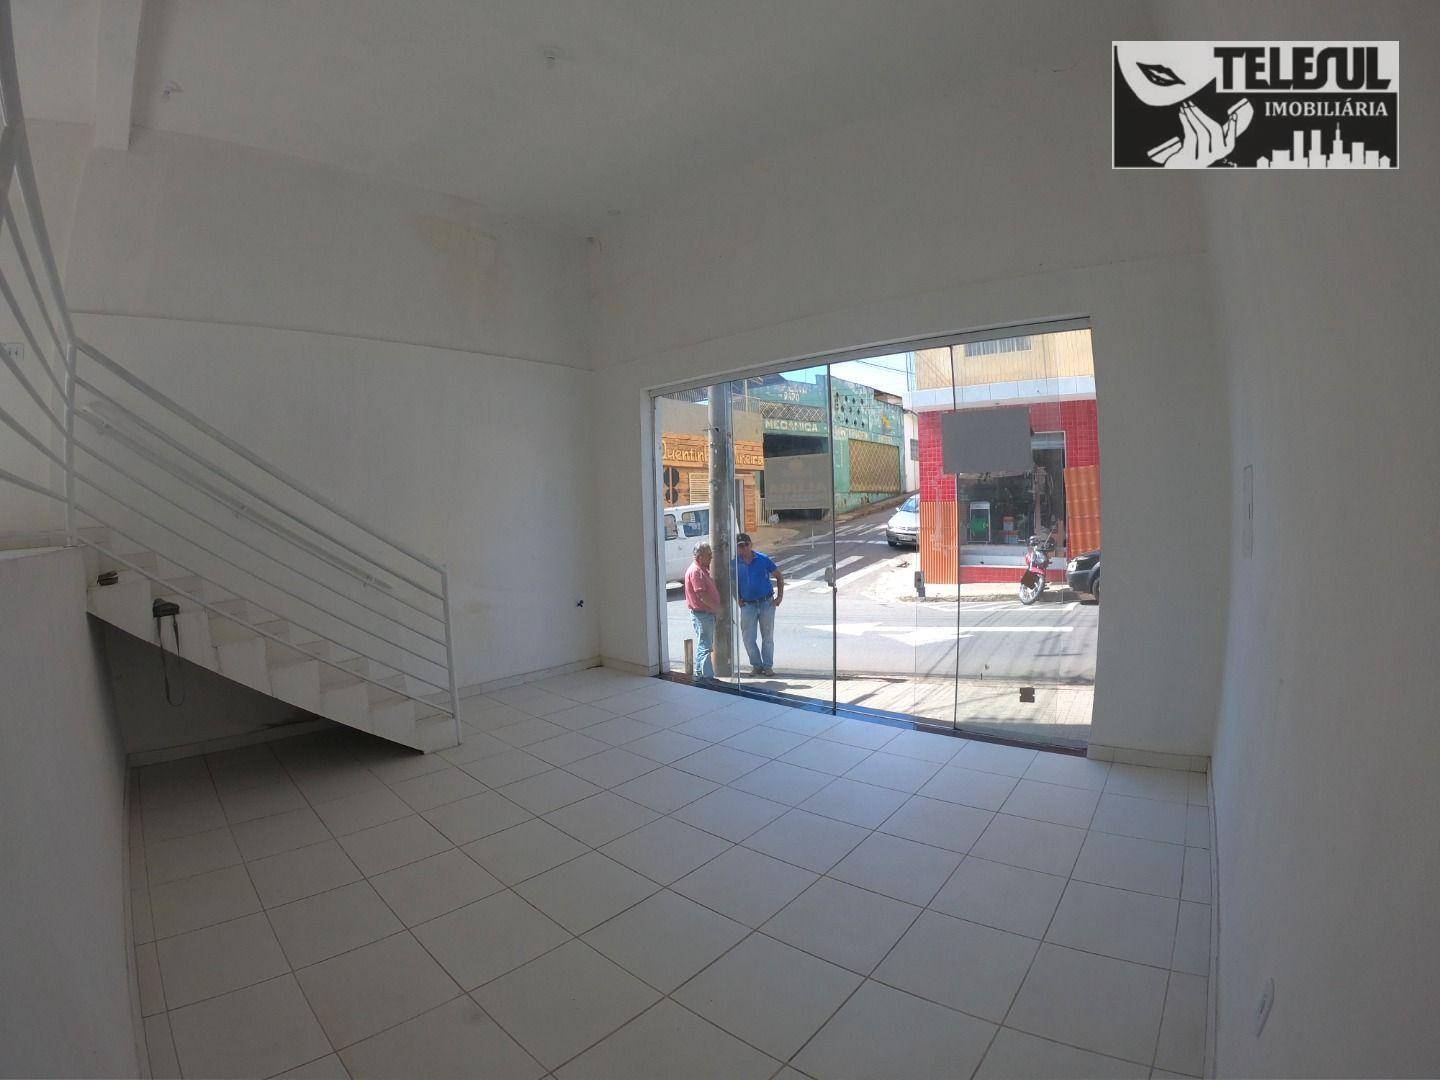 Loja-Salão, 158 m² - Foto 1